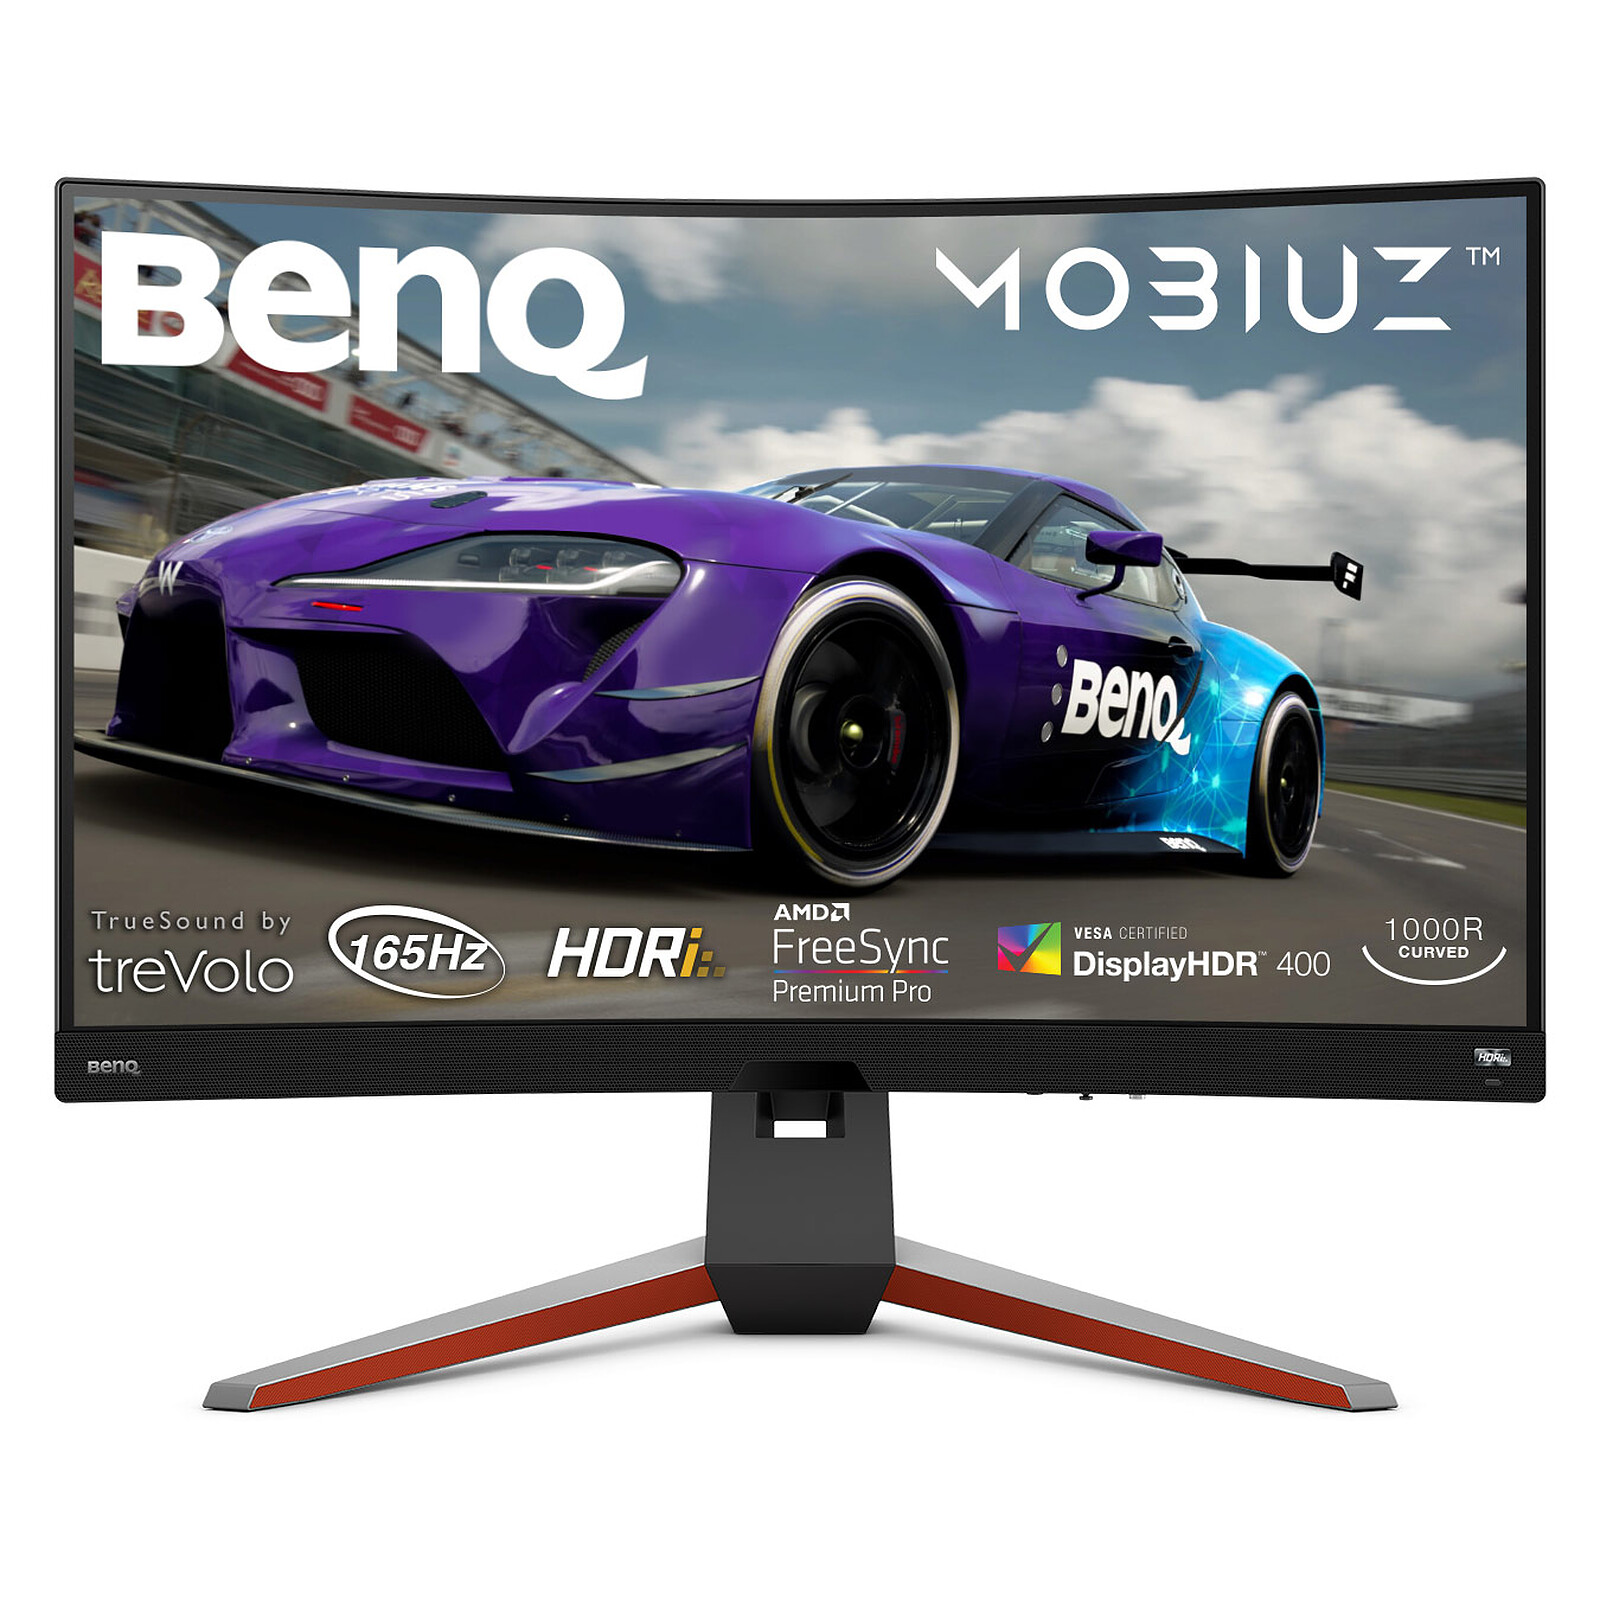 BenQ MOBIUZ 23.8 165Hz gaming monitor review